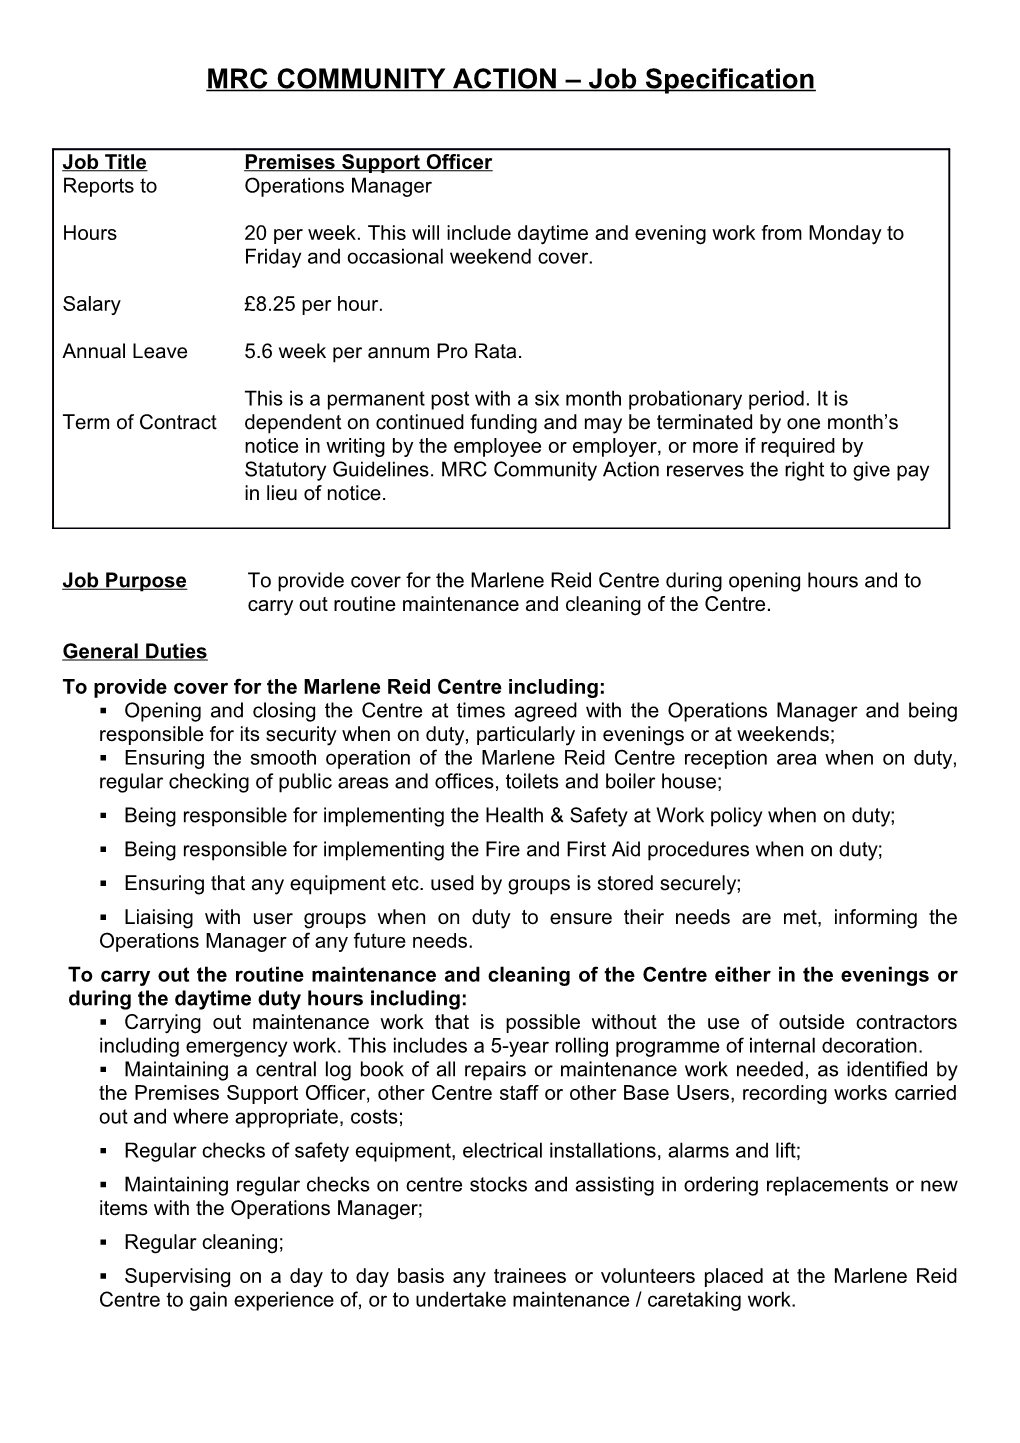 MRC COMMUNITY ACTION Job Specification